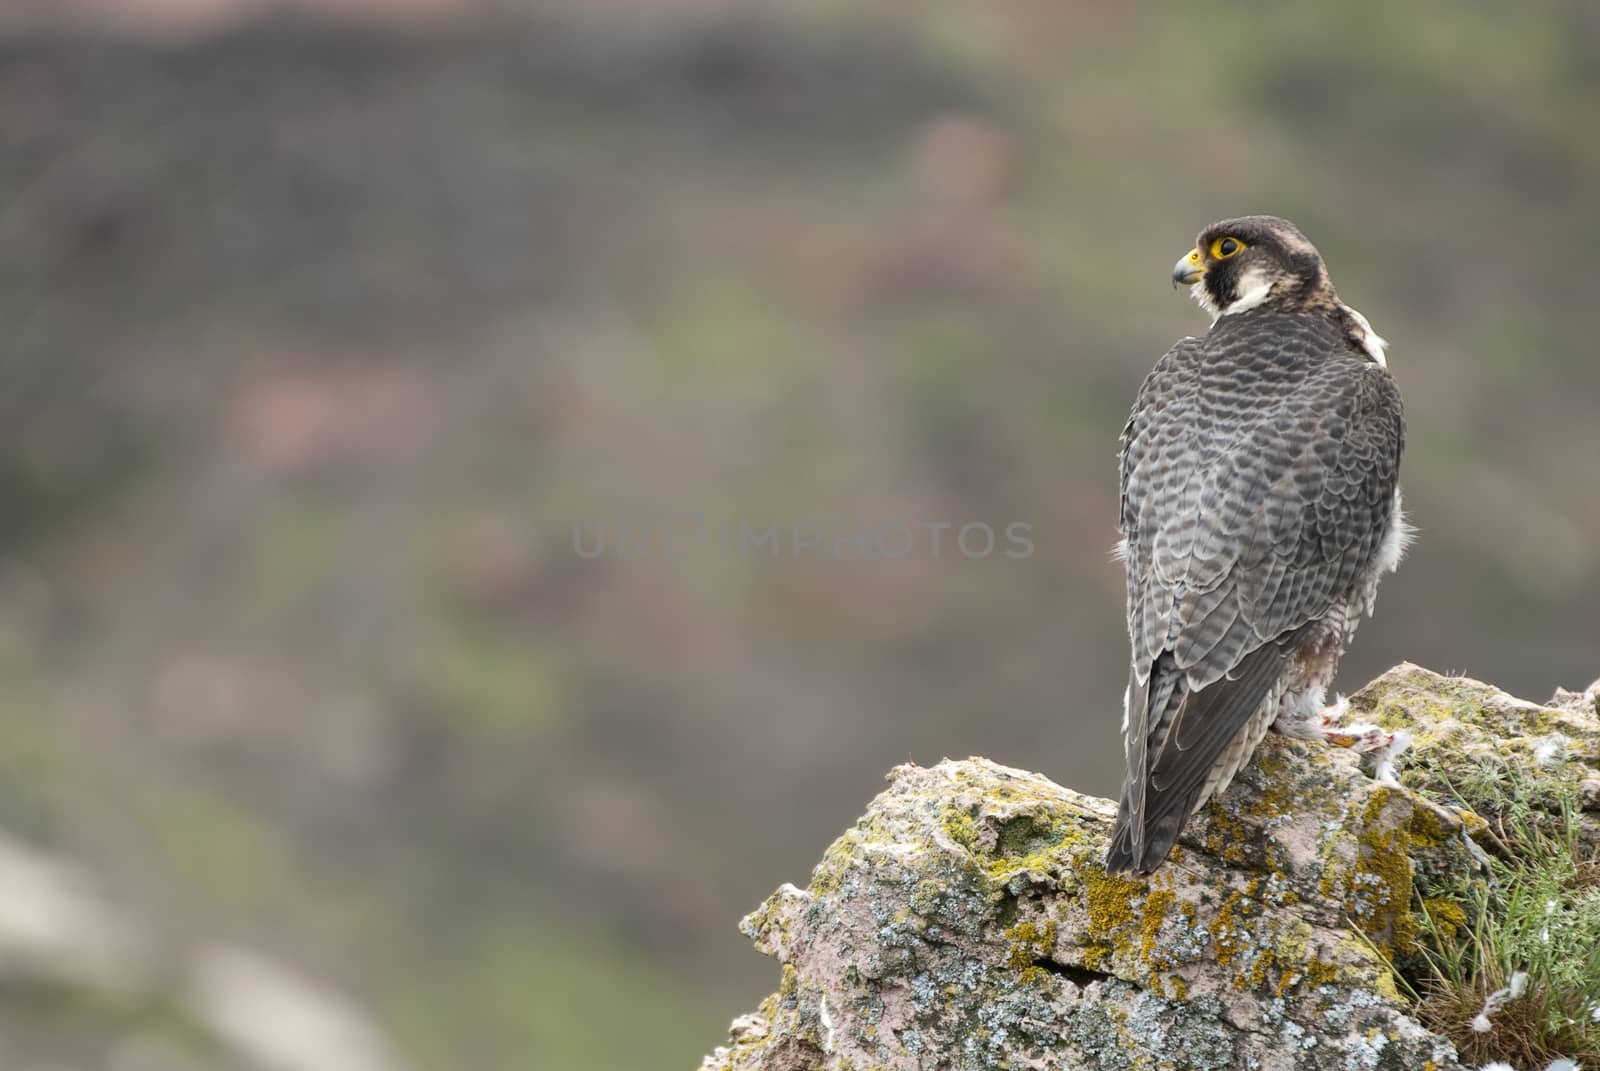 Peregrine falcon on the rock. Bird of prey, Male portrait, Falco by jalonsohu@gmail.com